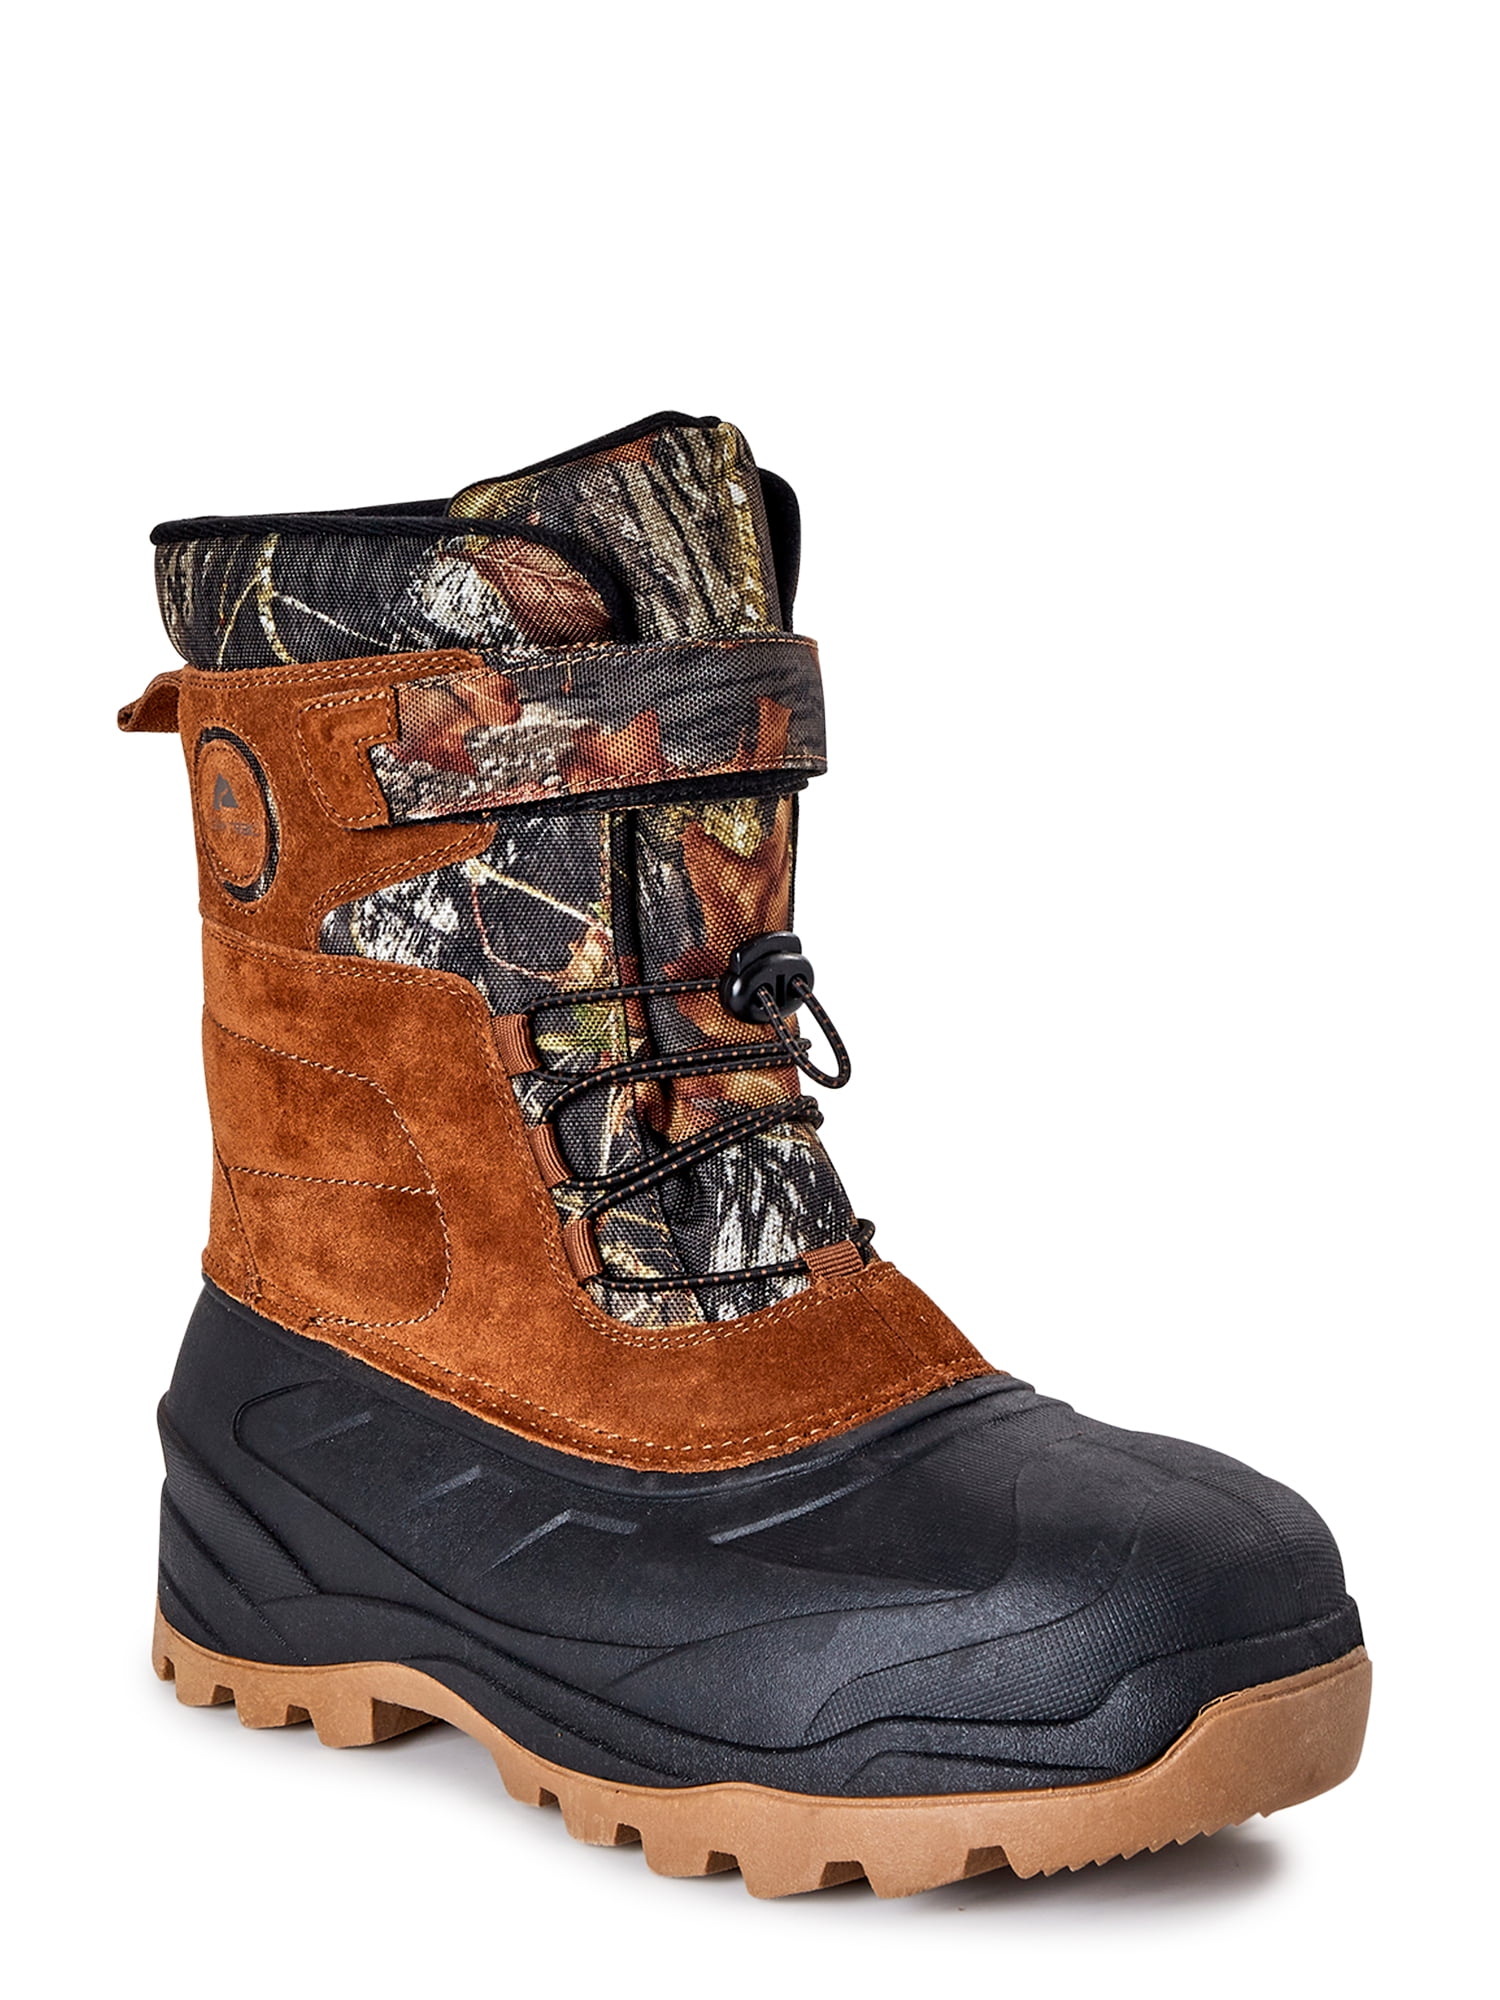 Ozark Trail Men's Winter Boots